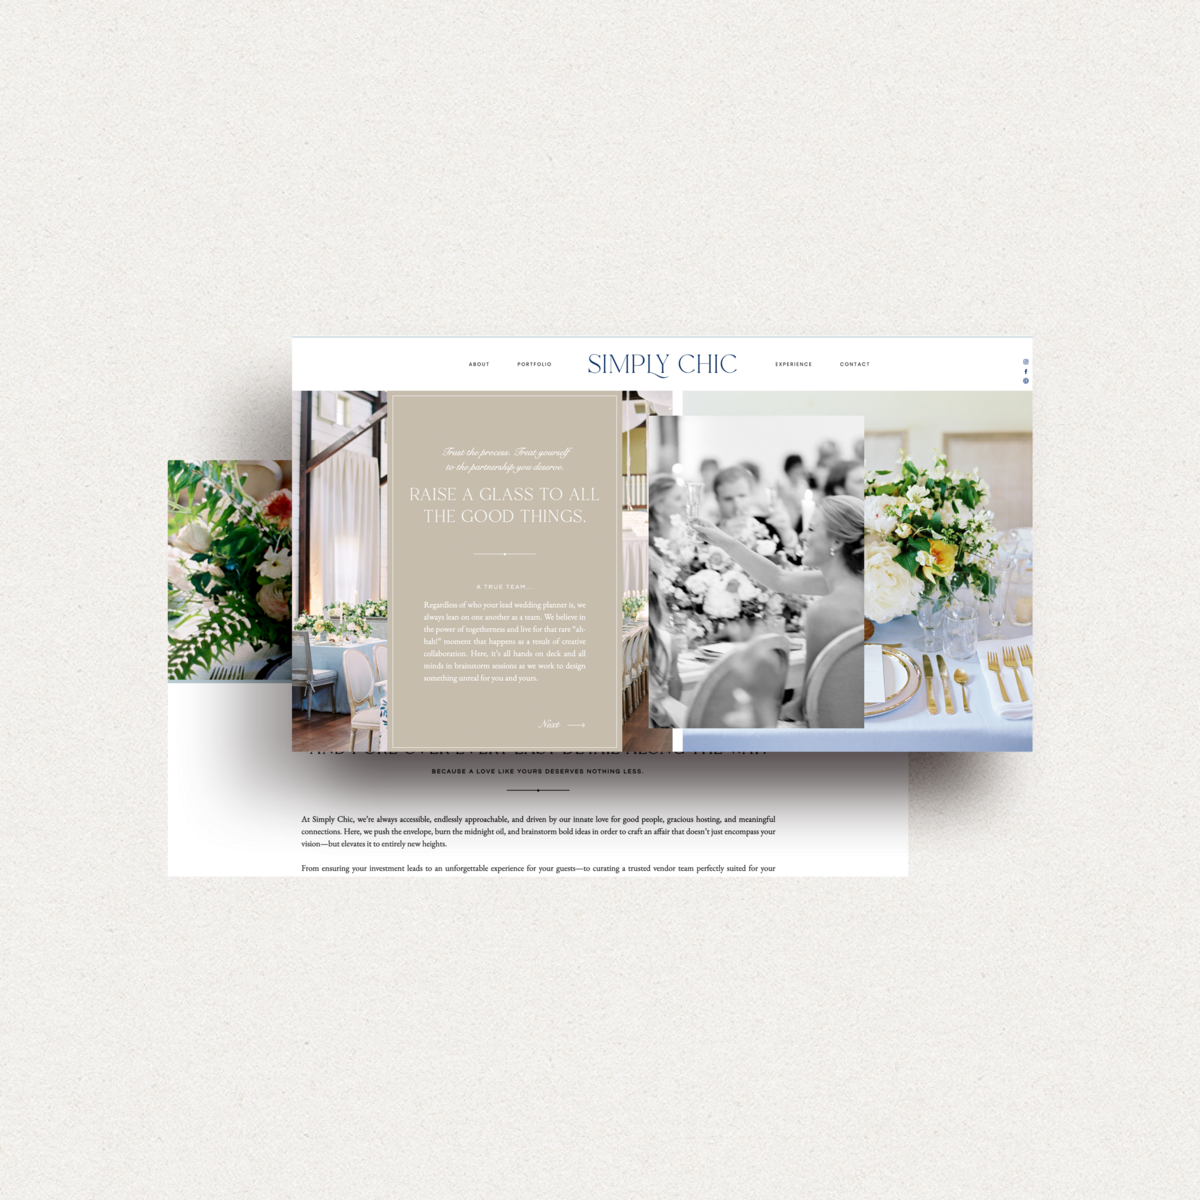 showit-website-designer-ashley-ferreira-design01